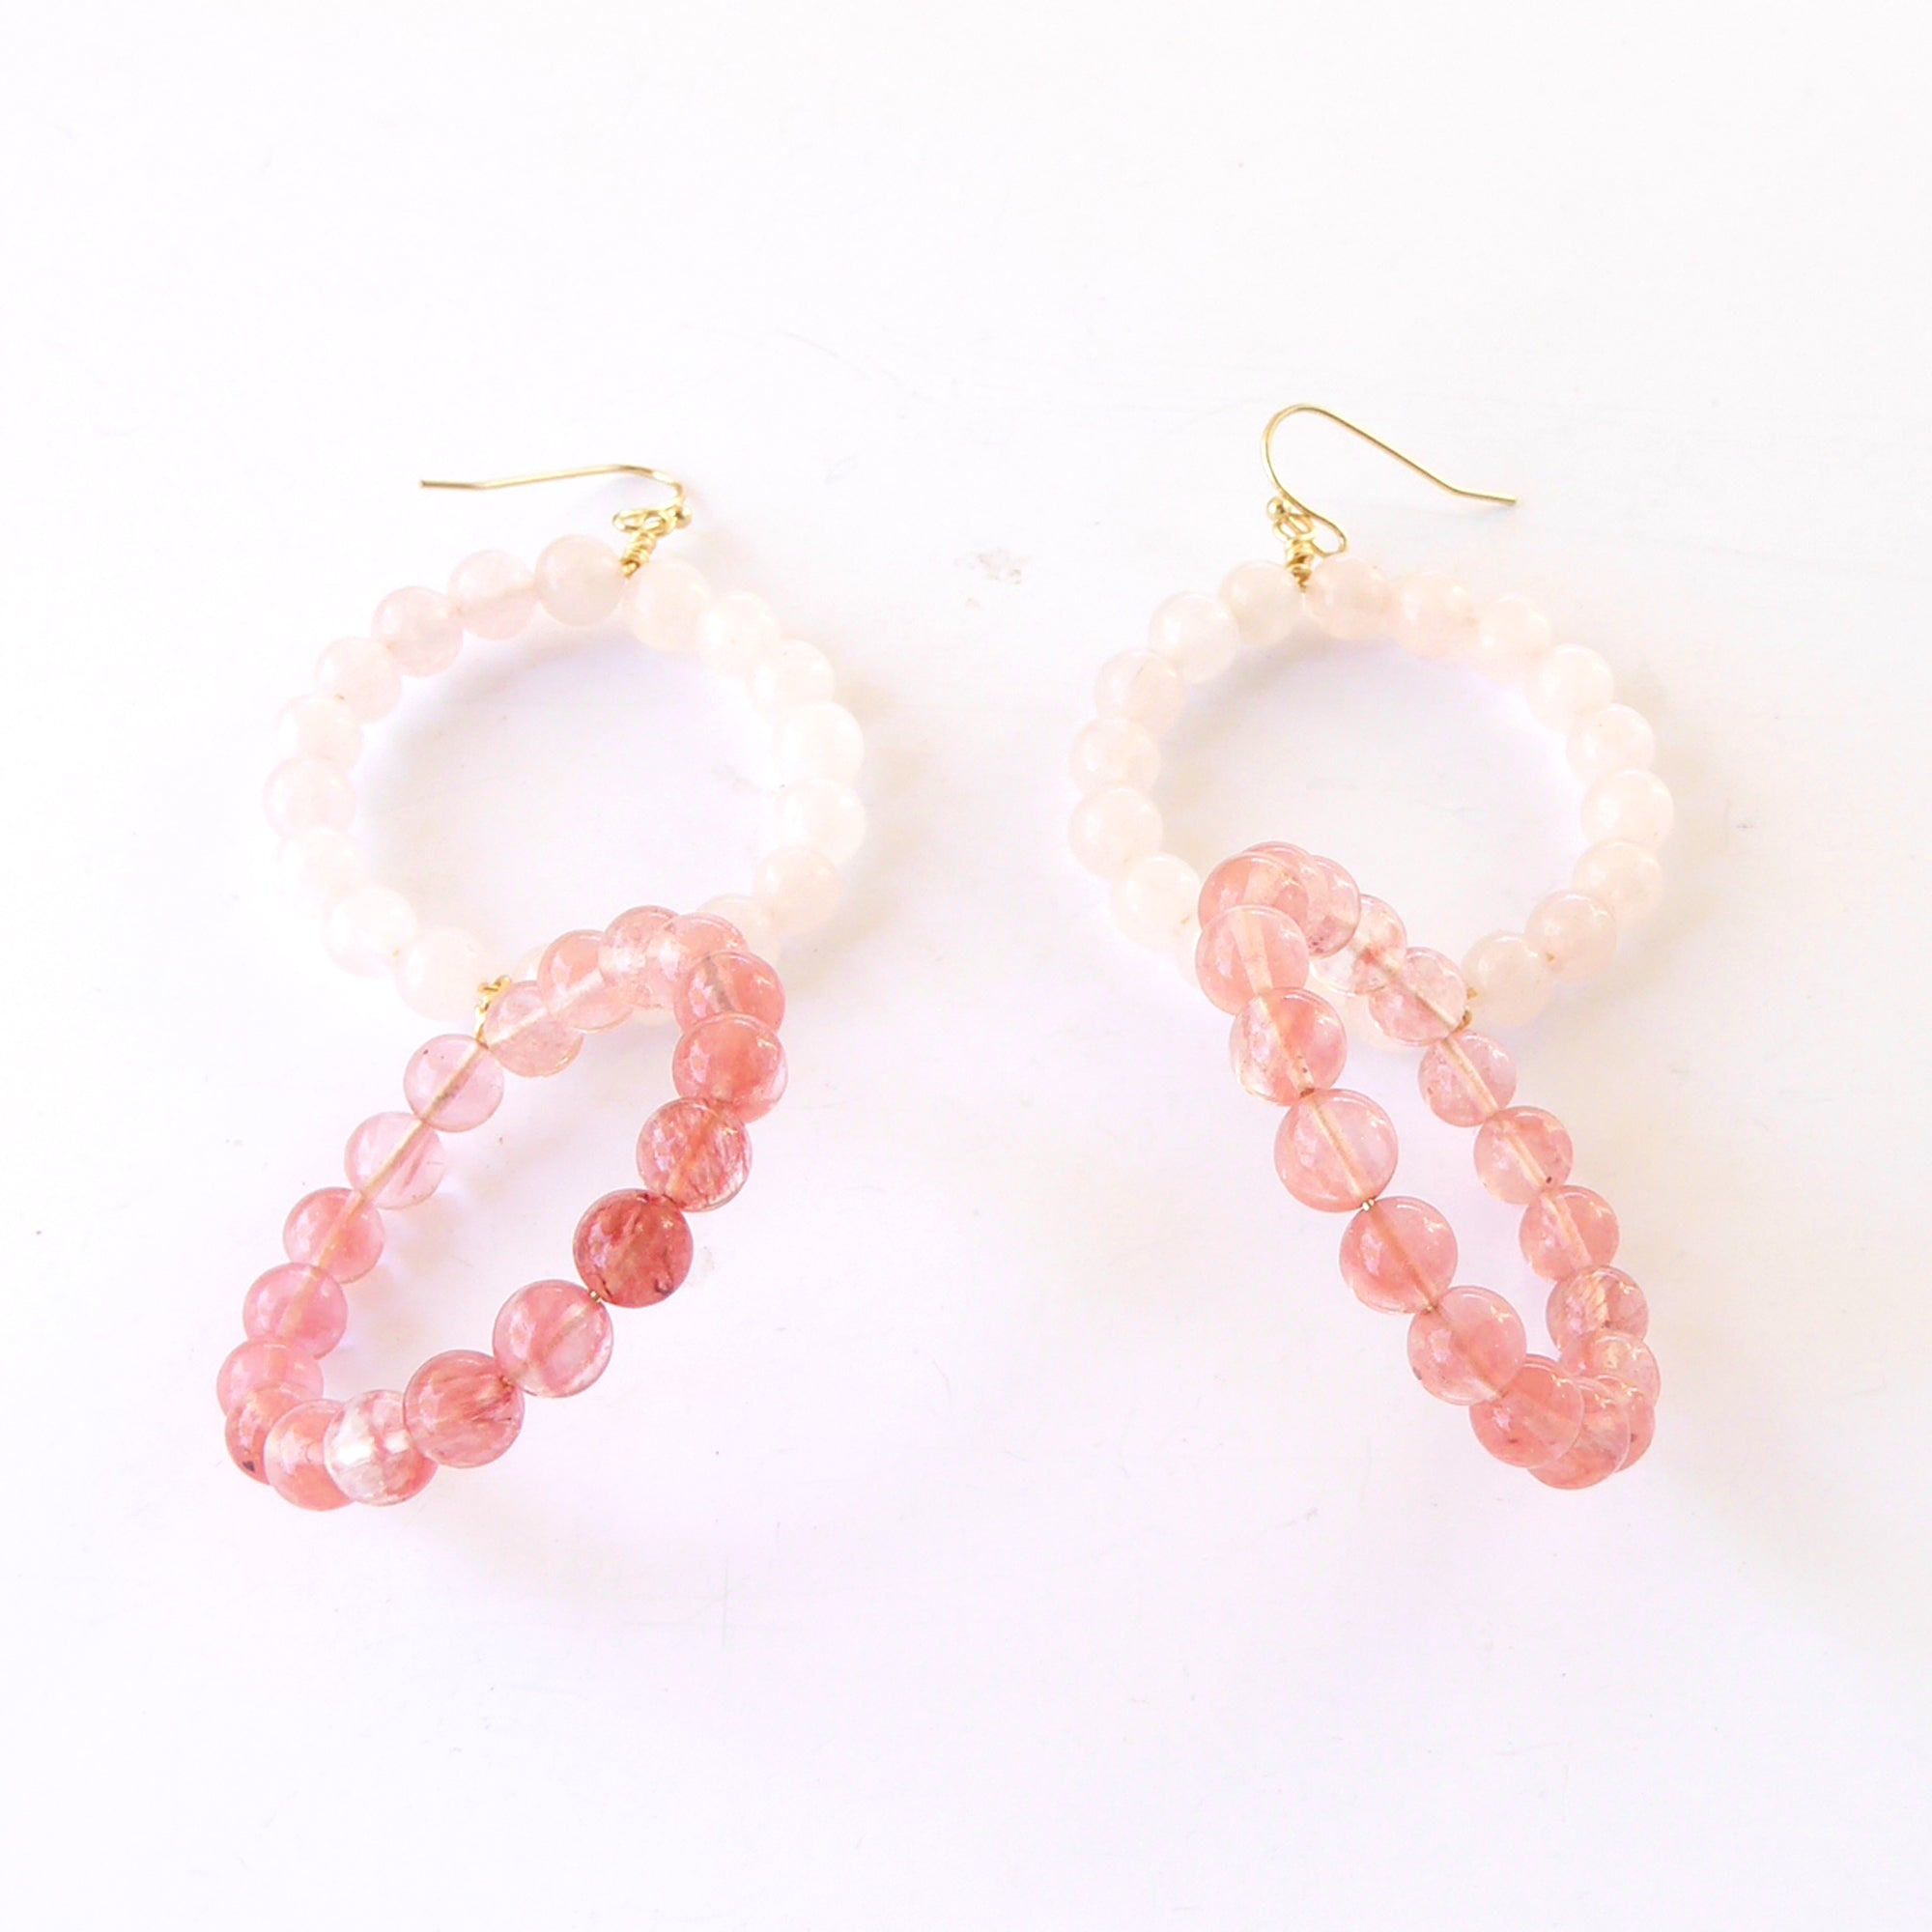 Cherry quartz circle earrings by Jenny Dayco 3